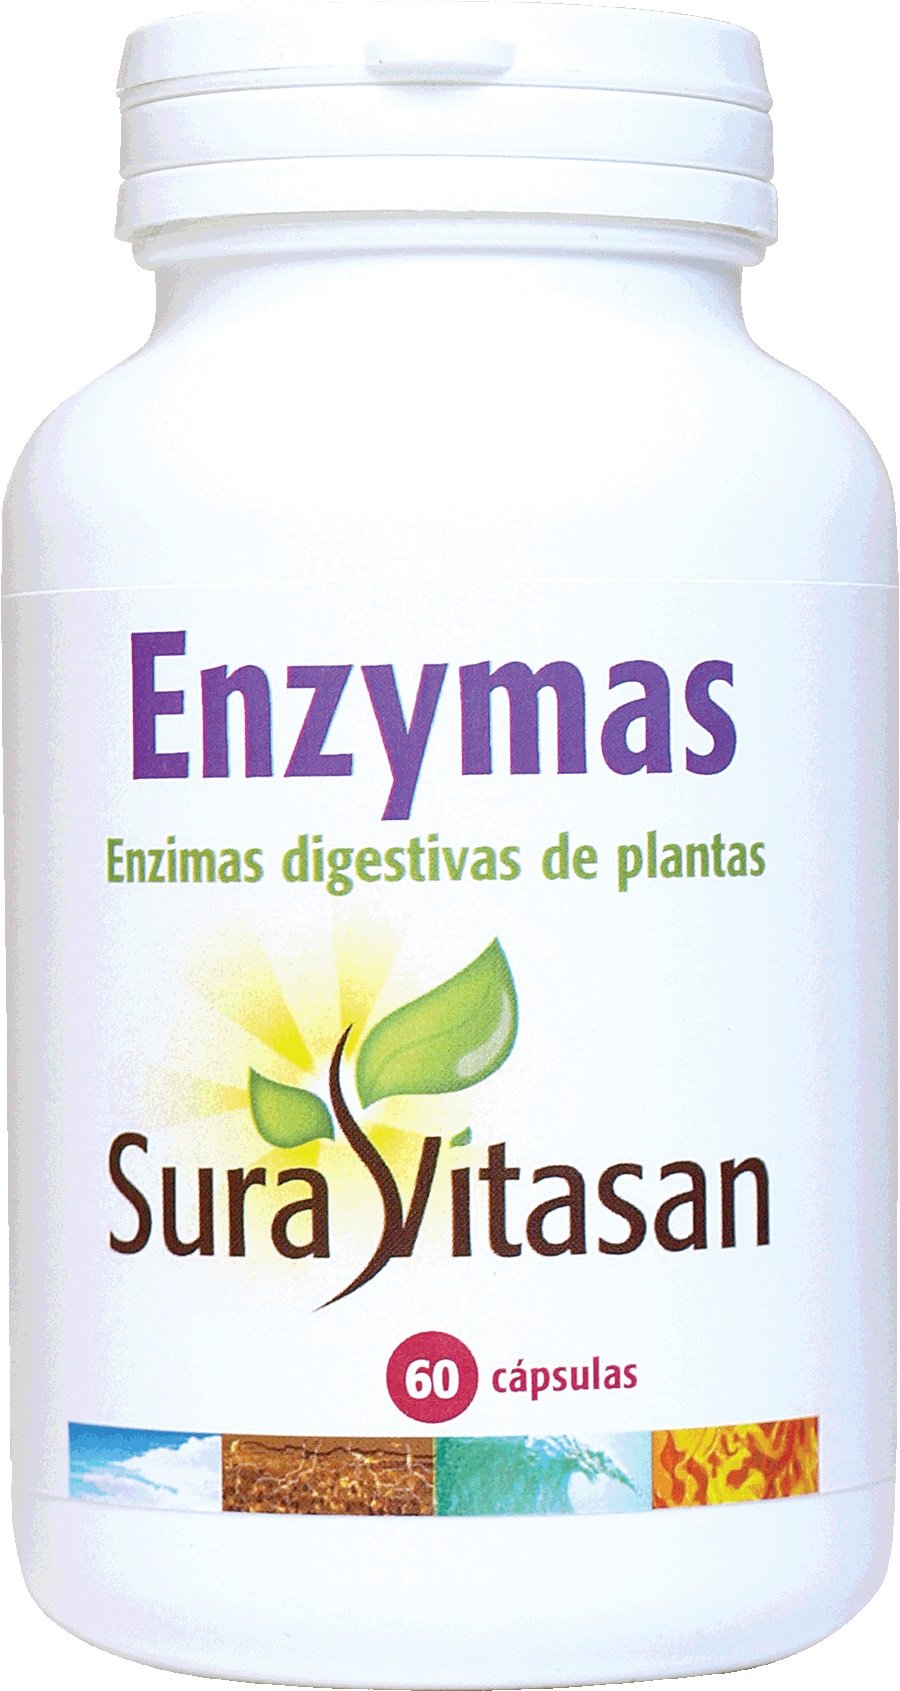 Sura Vitasan Enzimas Digestivas de plantas, 60 cápsulas. 